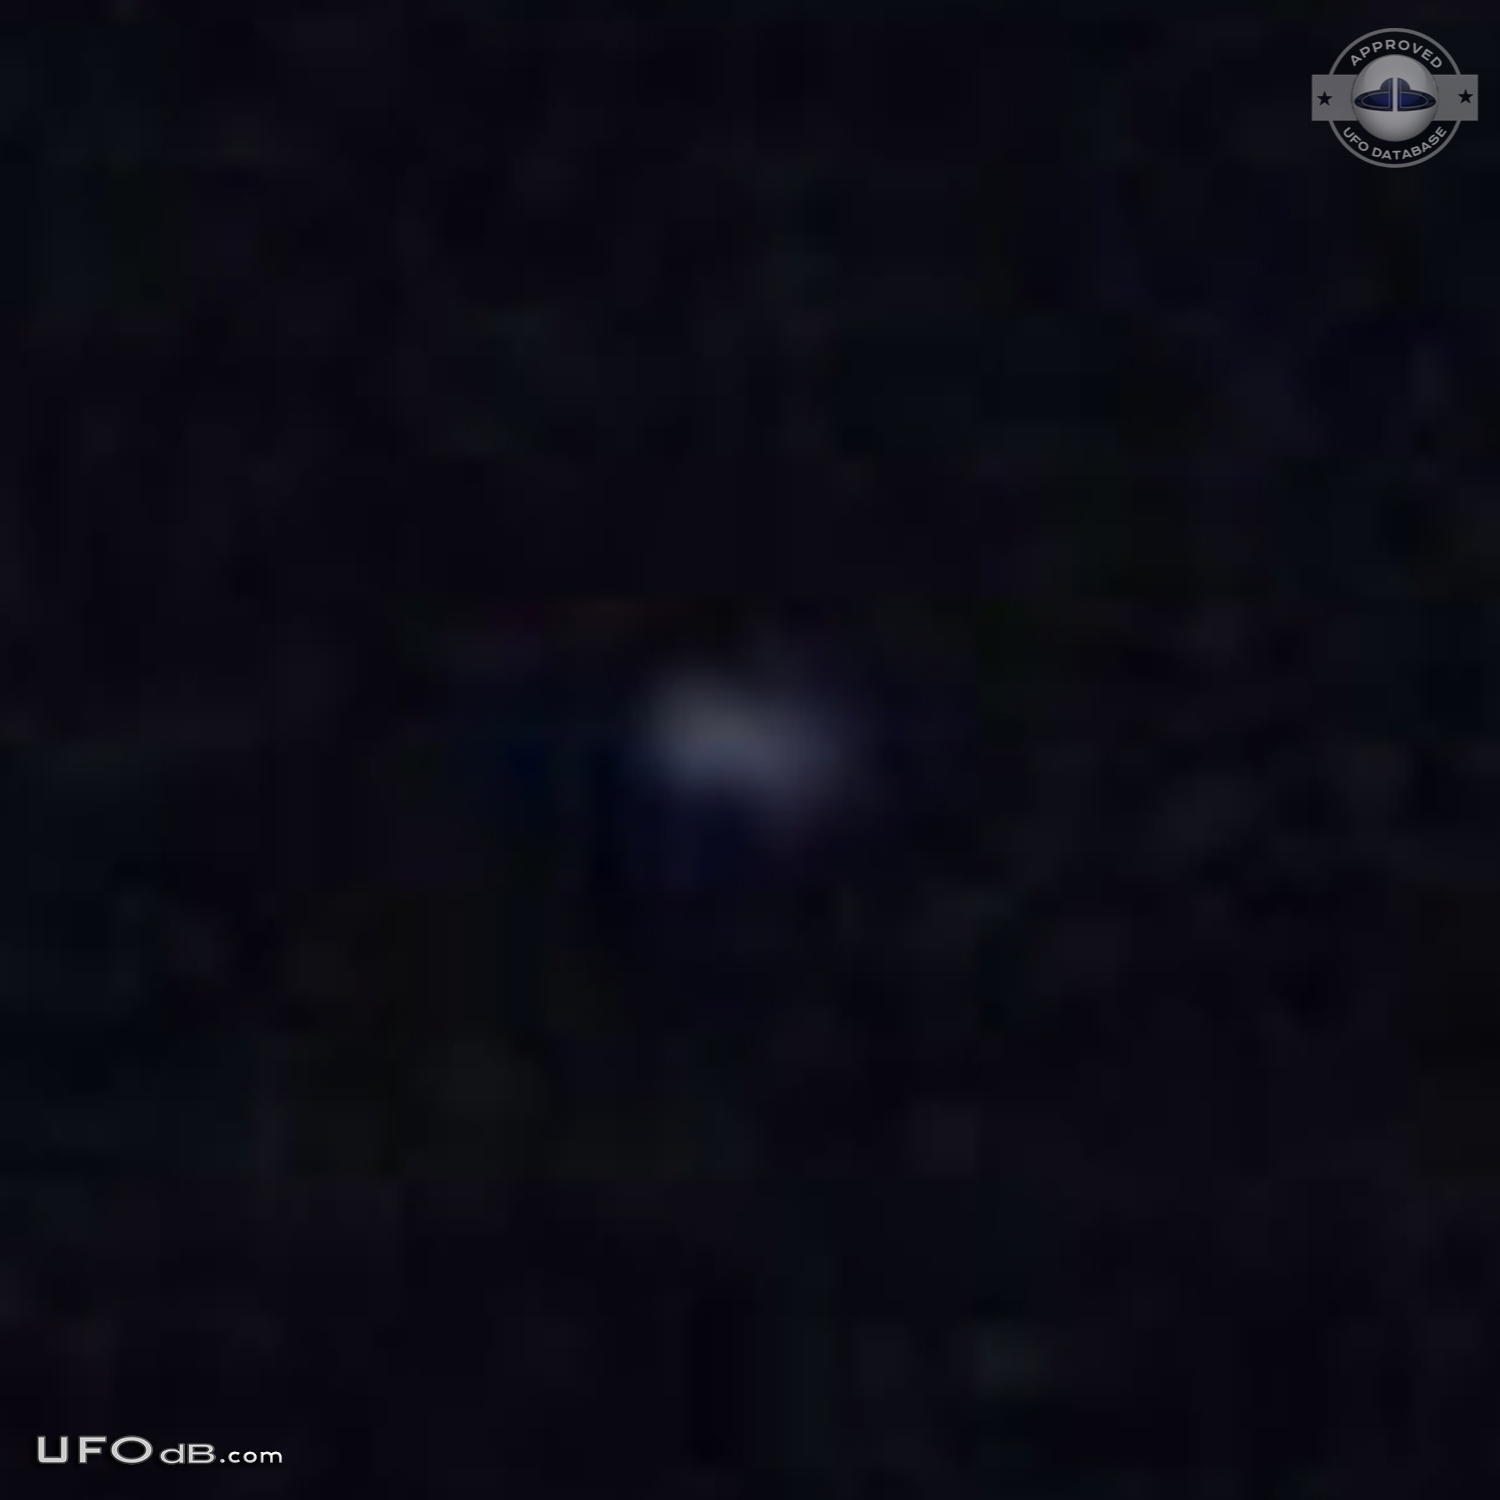 Smart entity with direction and attentiveness San Fernando California UFO Picture #642-4